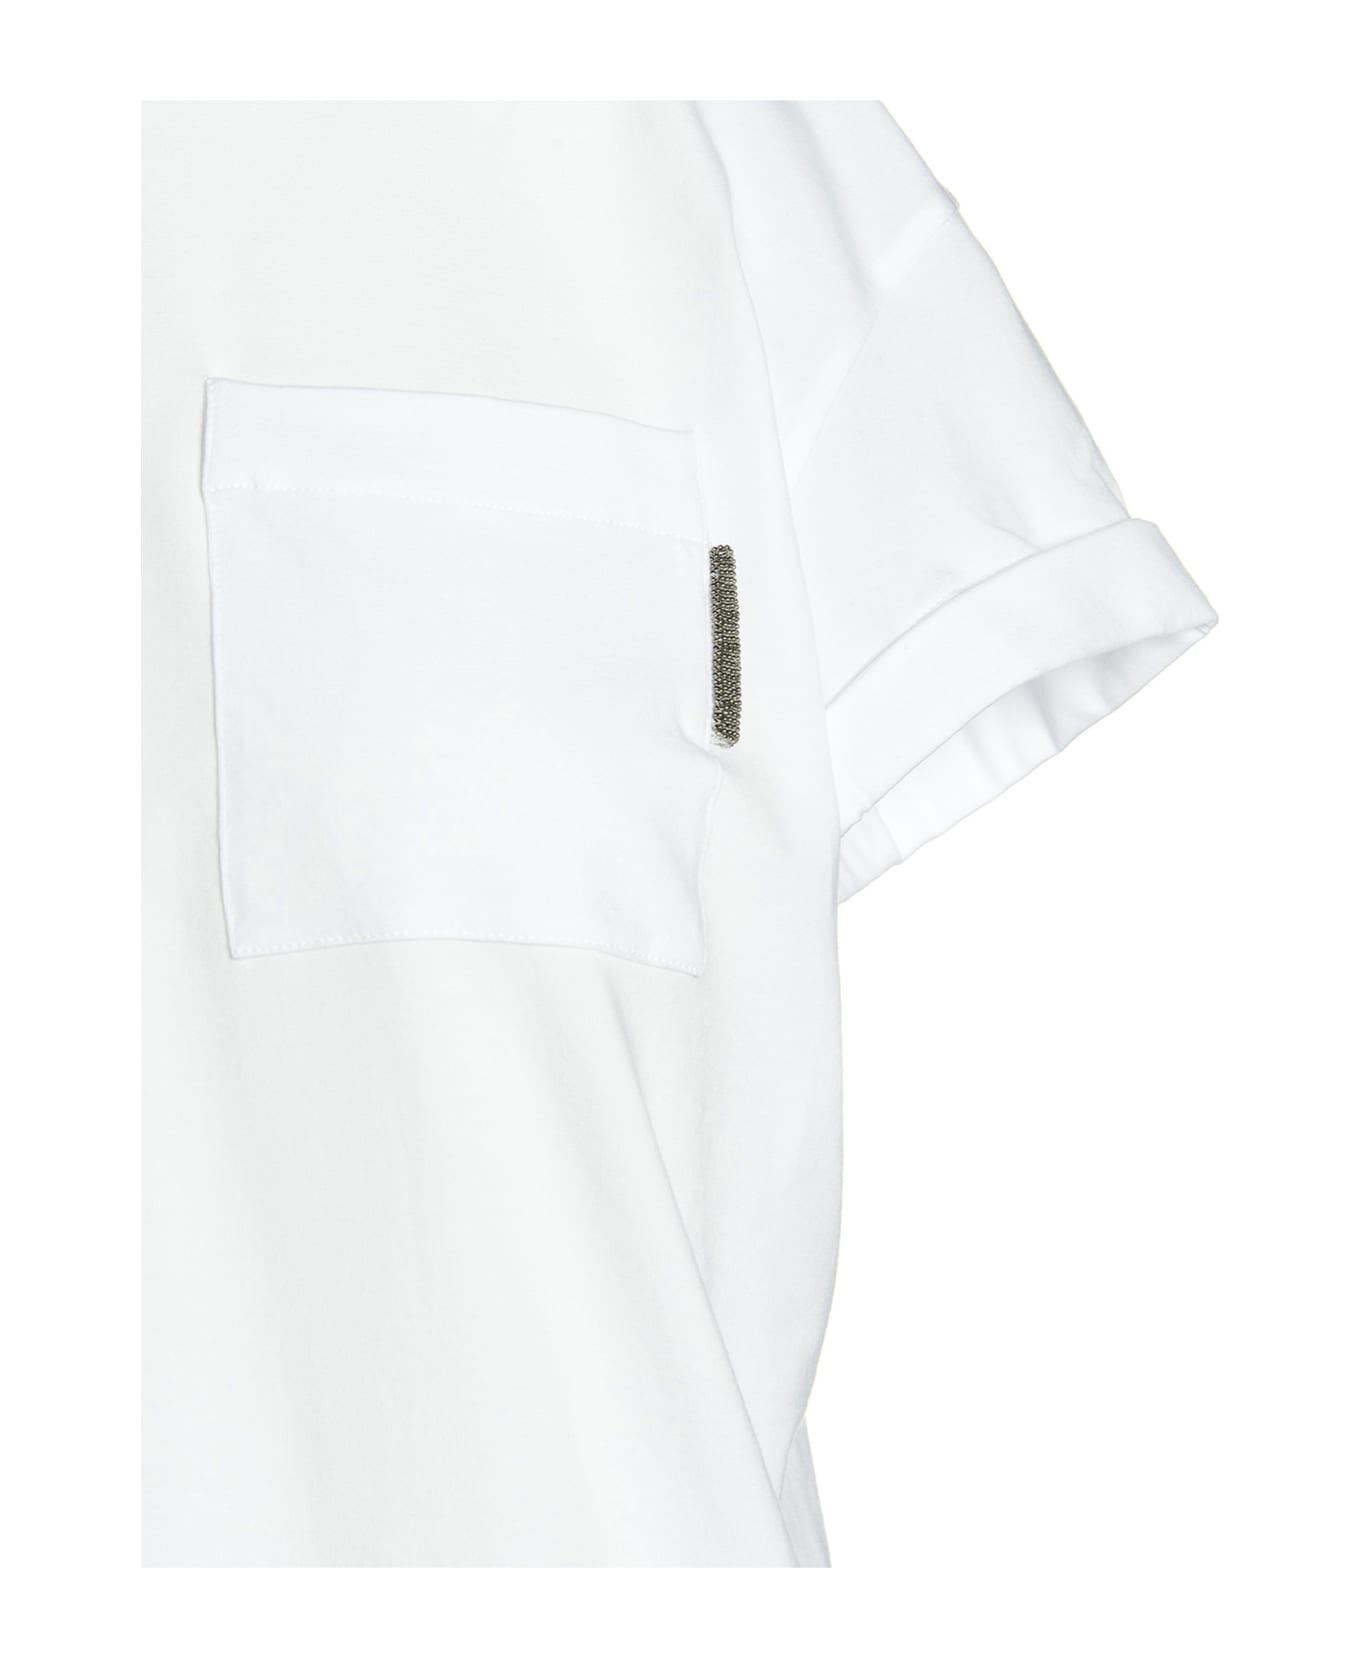 Brunello Cucinelli Chest Pockt Crewneck T-shirt - White Tシャツ